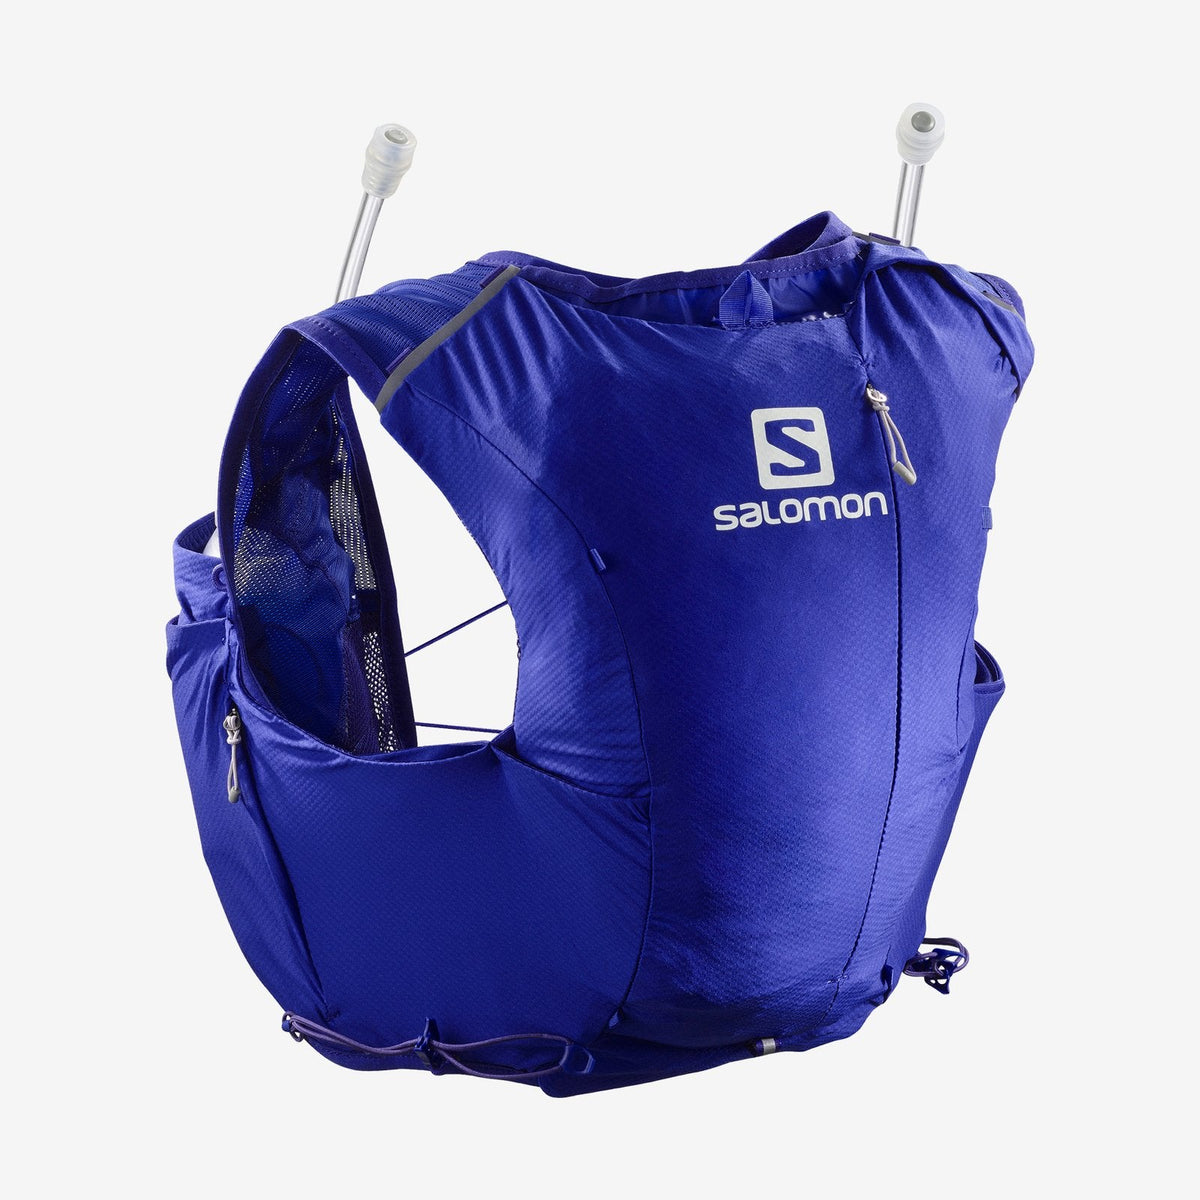 Salomon Advanced Skin 8 Set Trail Running Vest Pack (Women’s) - Clemantis Blue - Find Your Feet Australia Hobart Launceston Tasmania